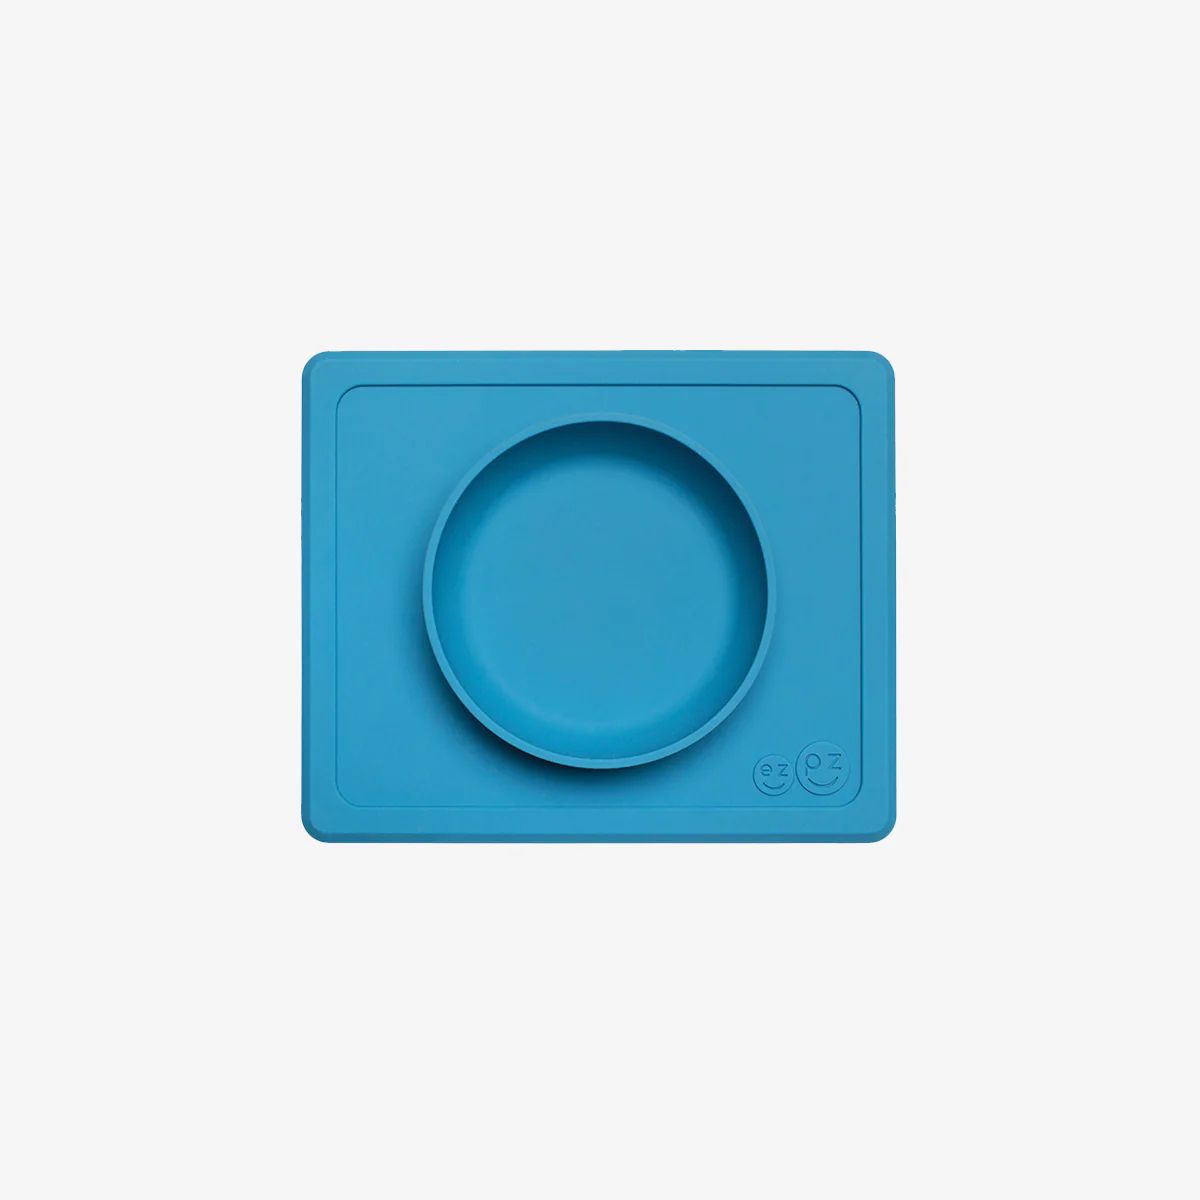 The Mini Bowl by ezpz / Self-Suctioning Silicone Bowl + Placemat | ezpz